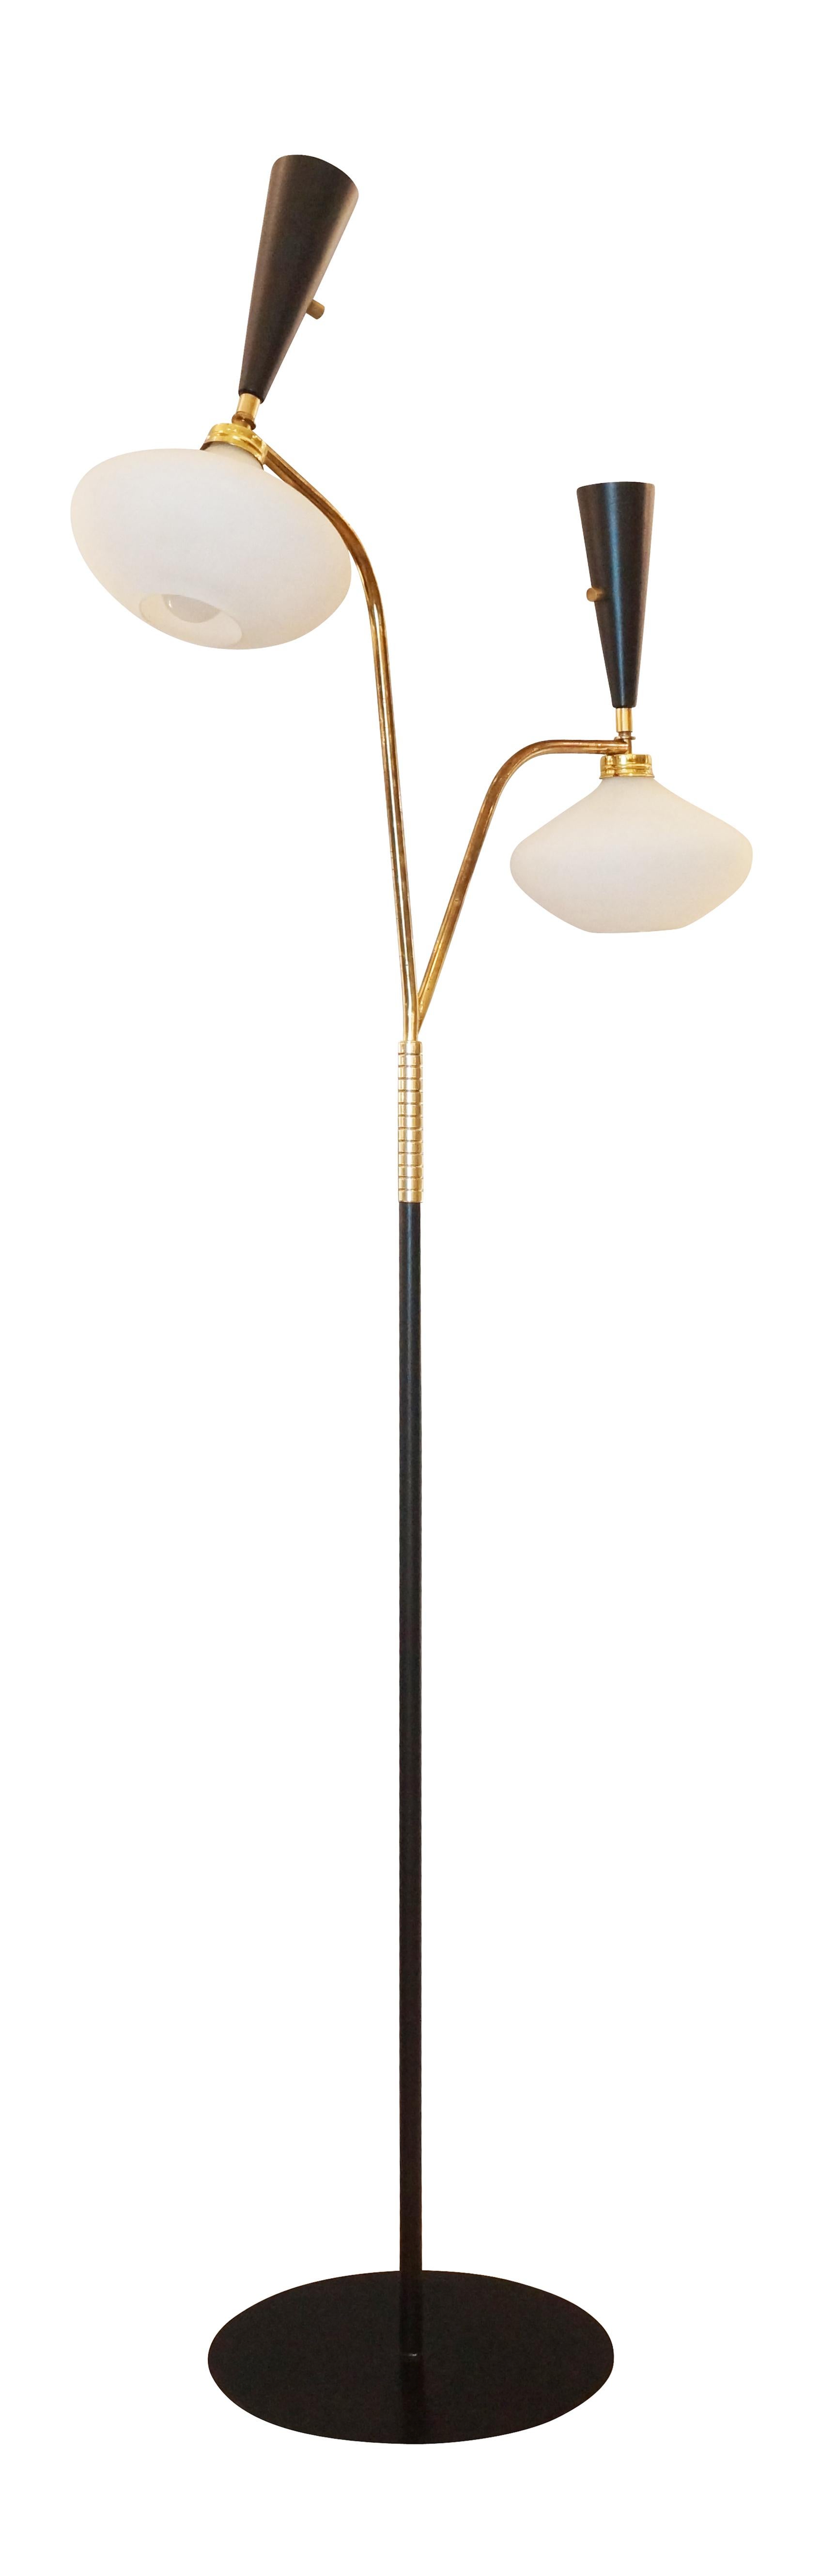 Mid-20th Century Italian Mid-Century Floor Lamp For Sale